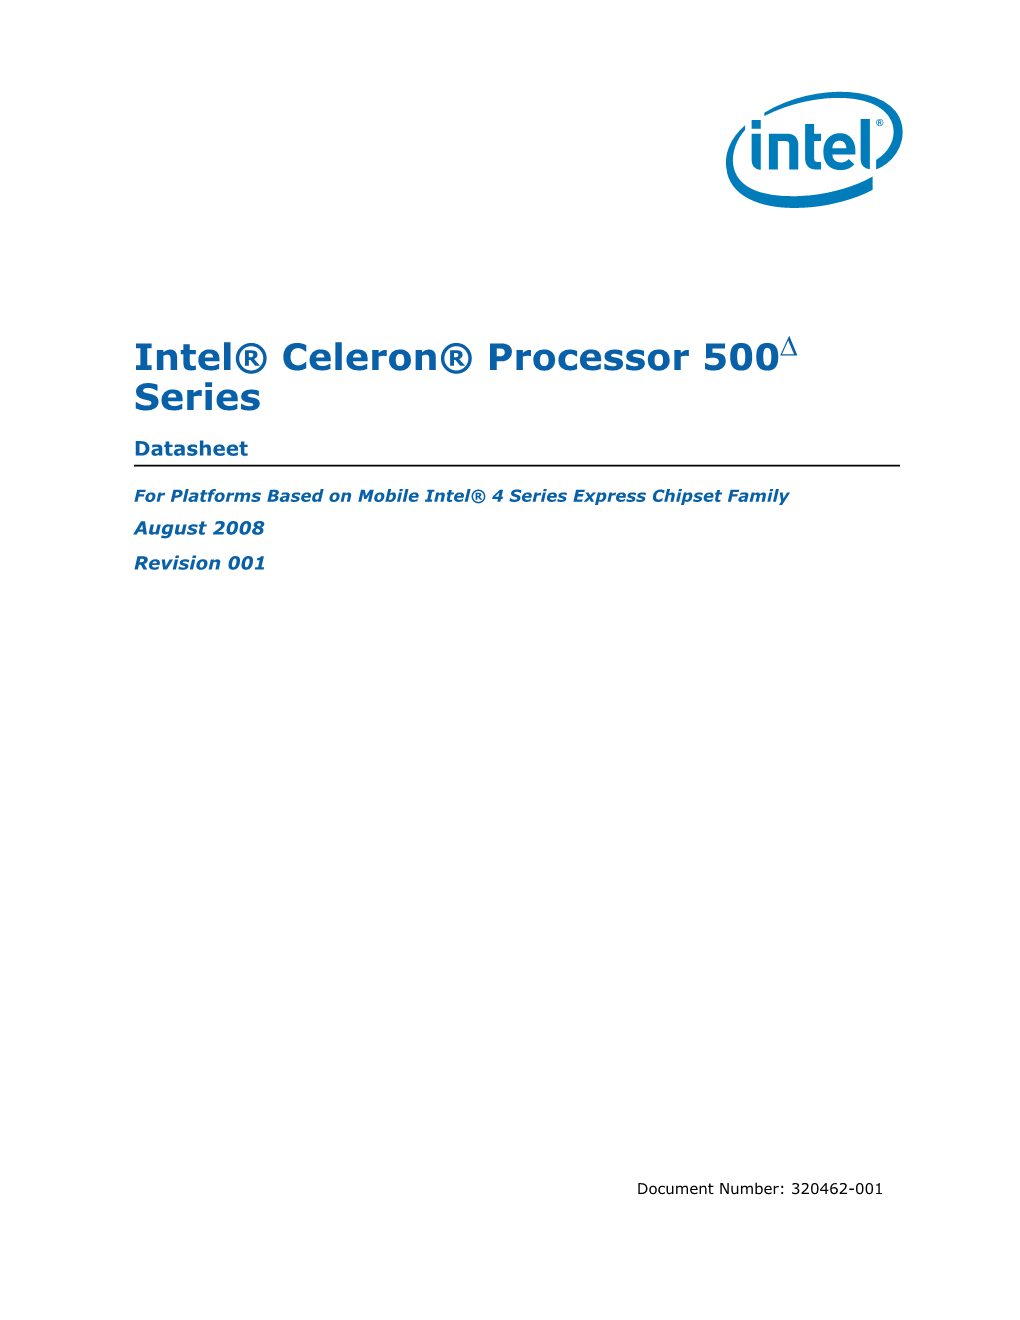 Intel® Celeron® Processor 500 Series for Platforms Based on Mobile Intel® 4 Series Express Chipset Families